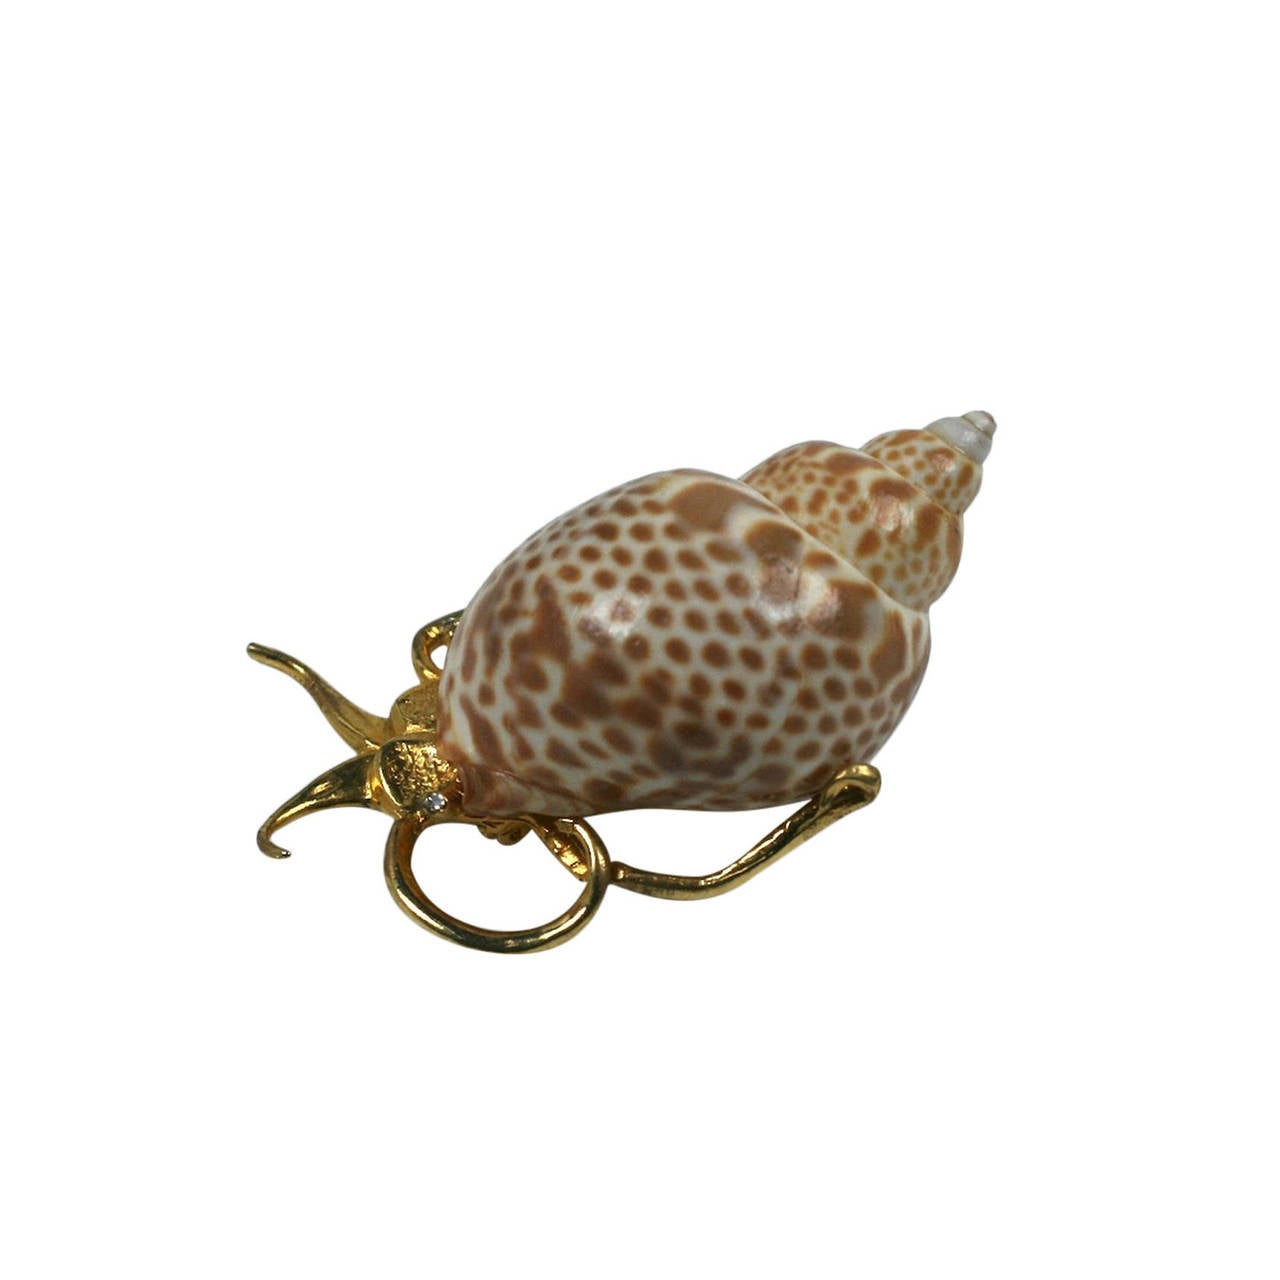 Kenneth Jay Lane's Snail brooch For Sale